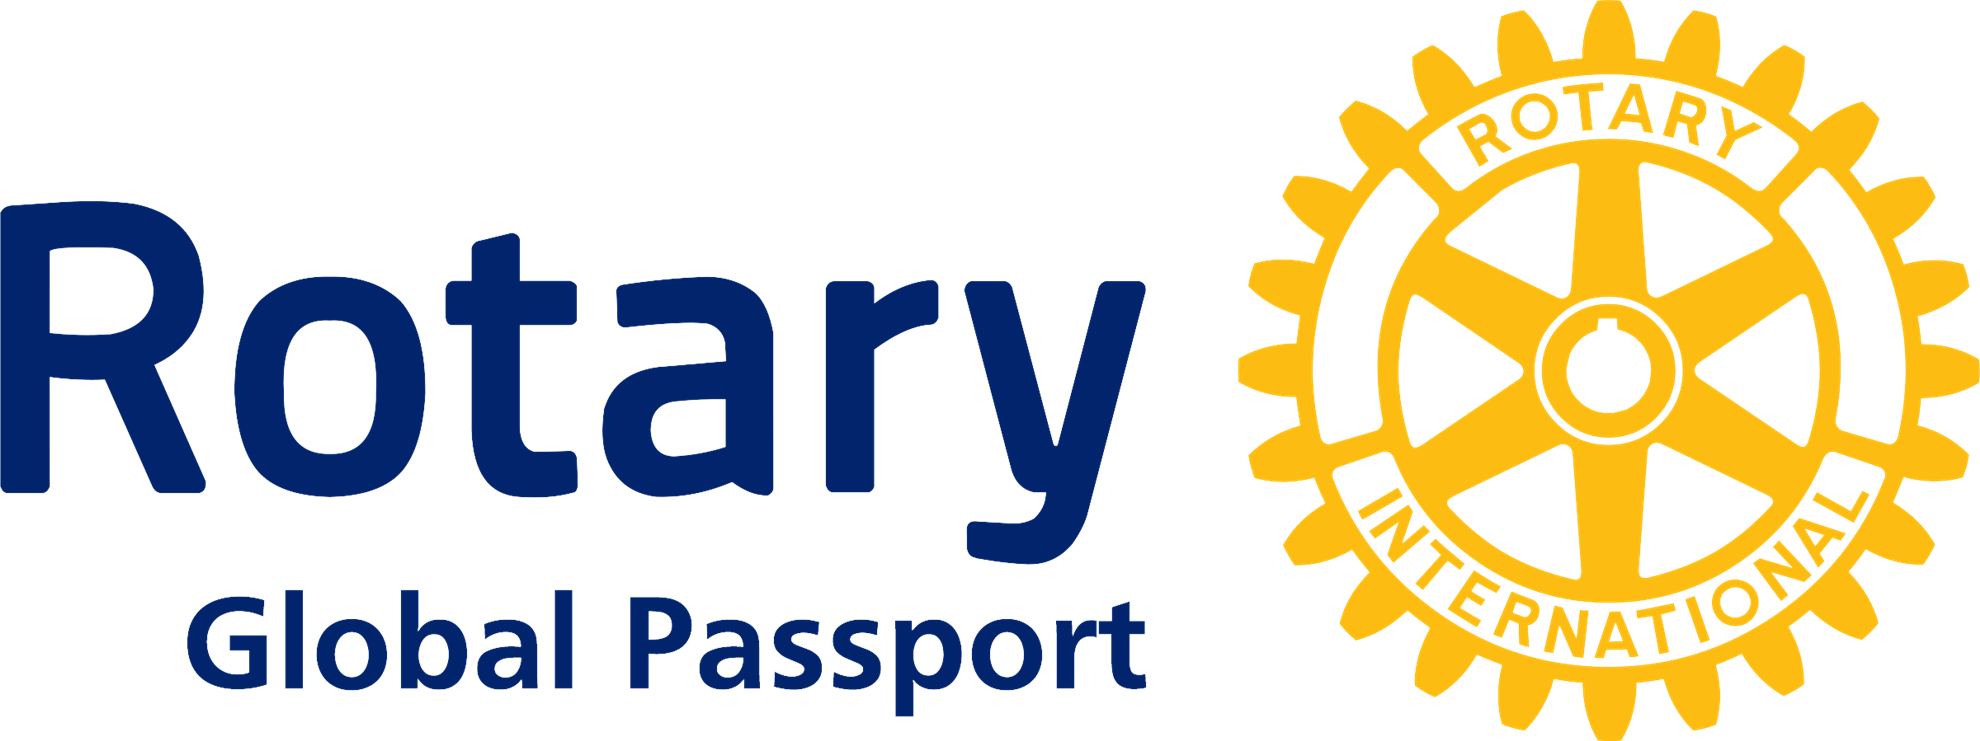 Global Passport logo